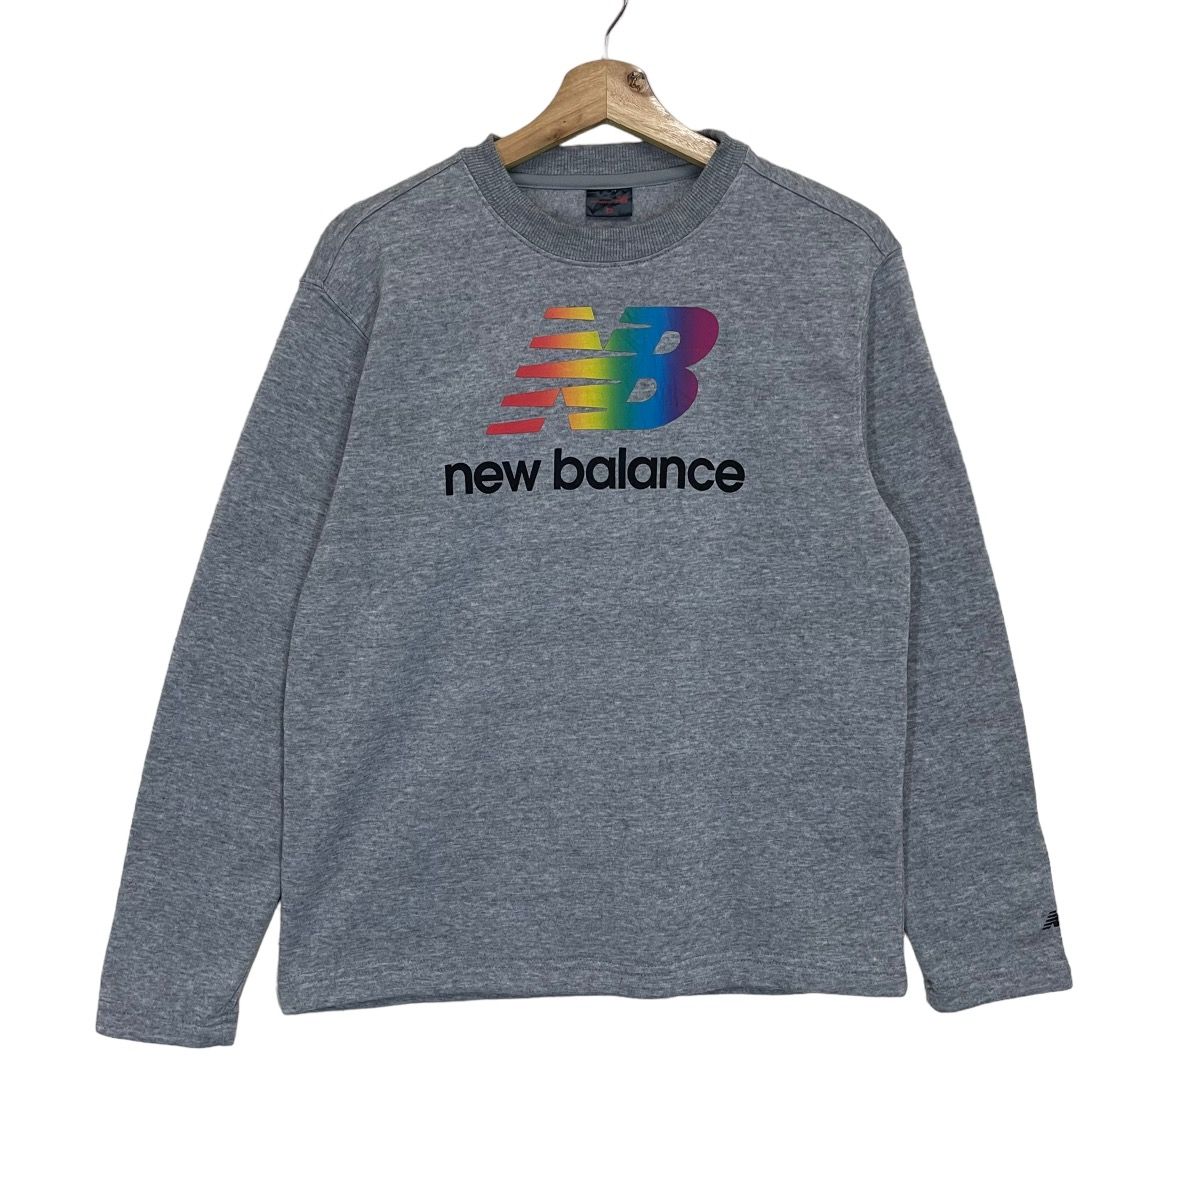 New Balance Big Logo Crew Neck Sweatshirt Size M - 1